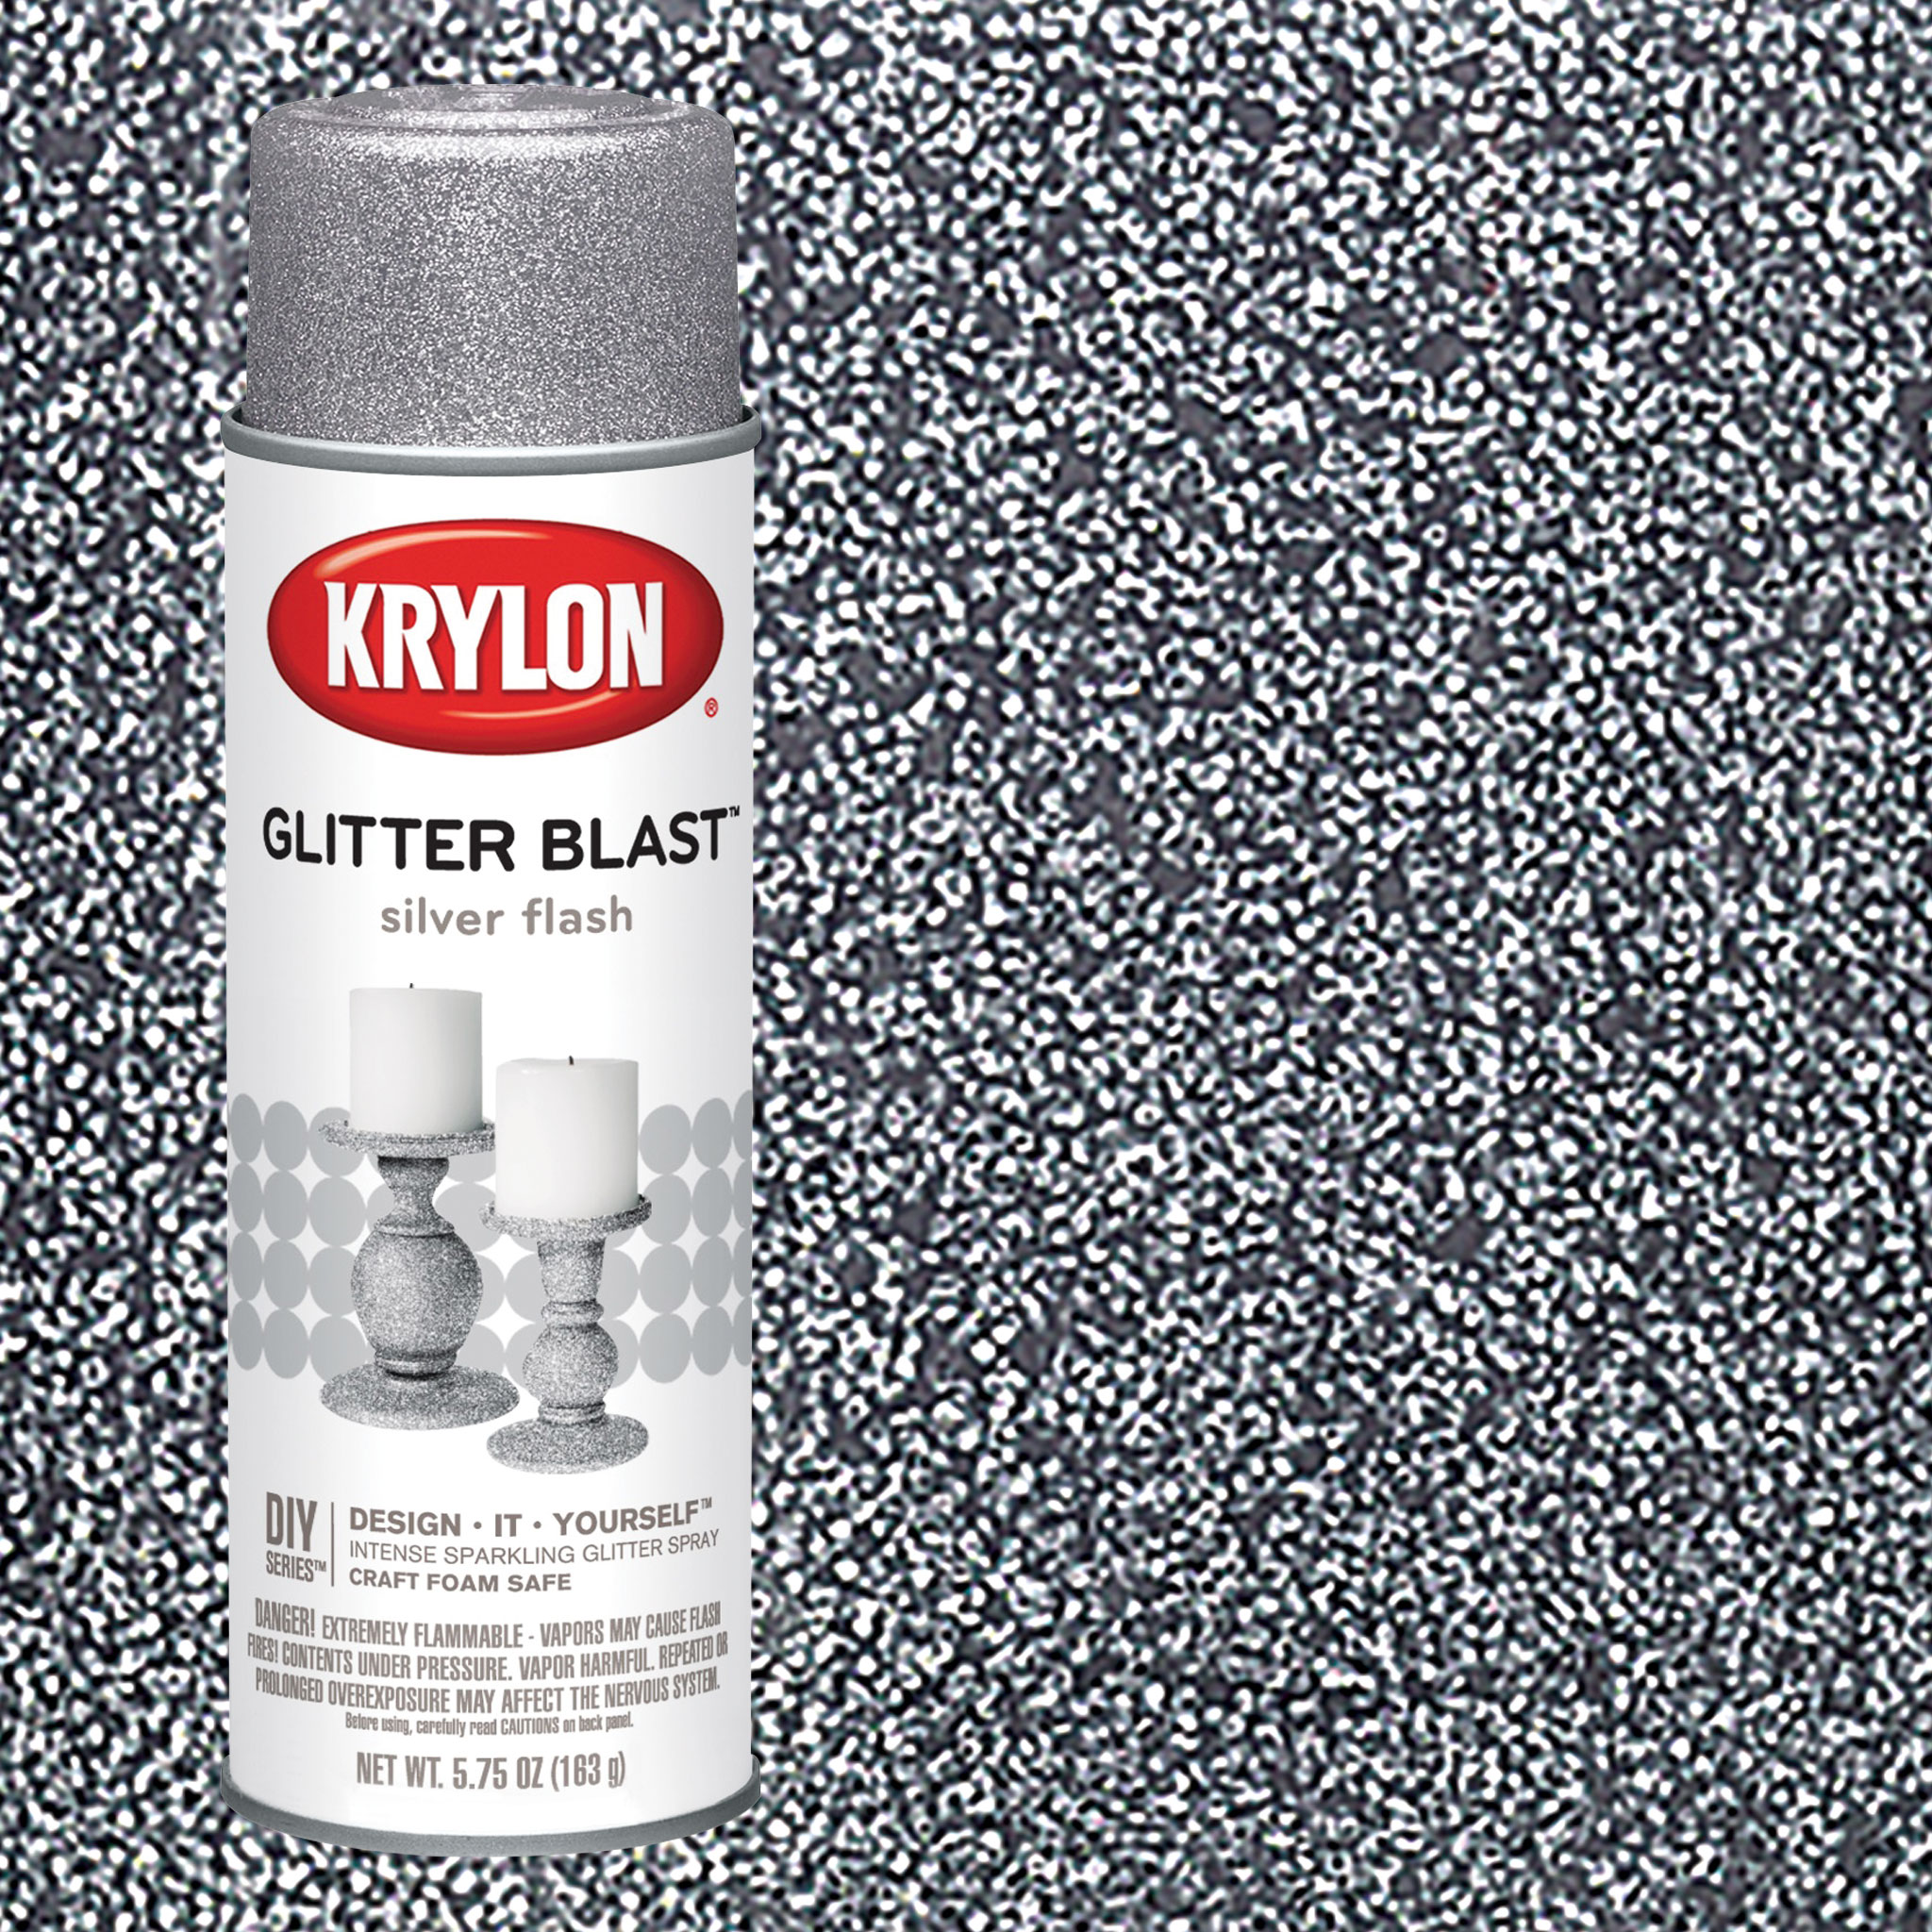  Krylon Glitter Blast Glitter Spray Paint for Craft